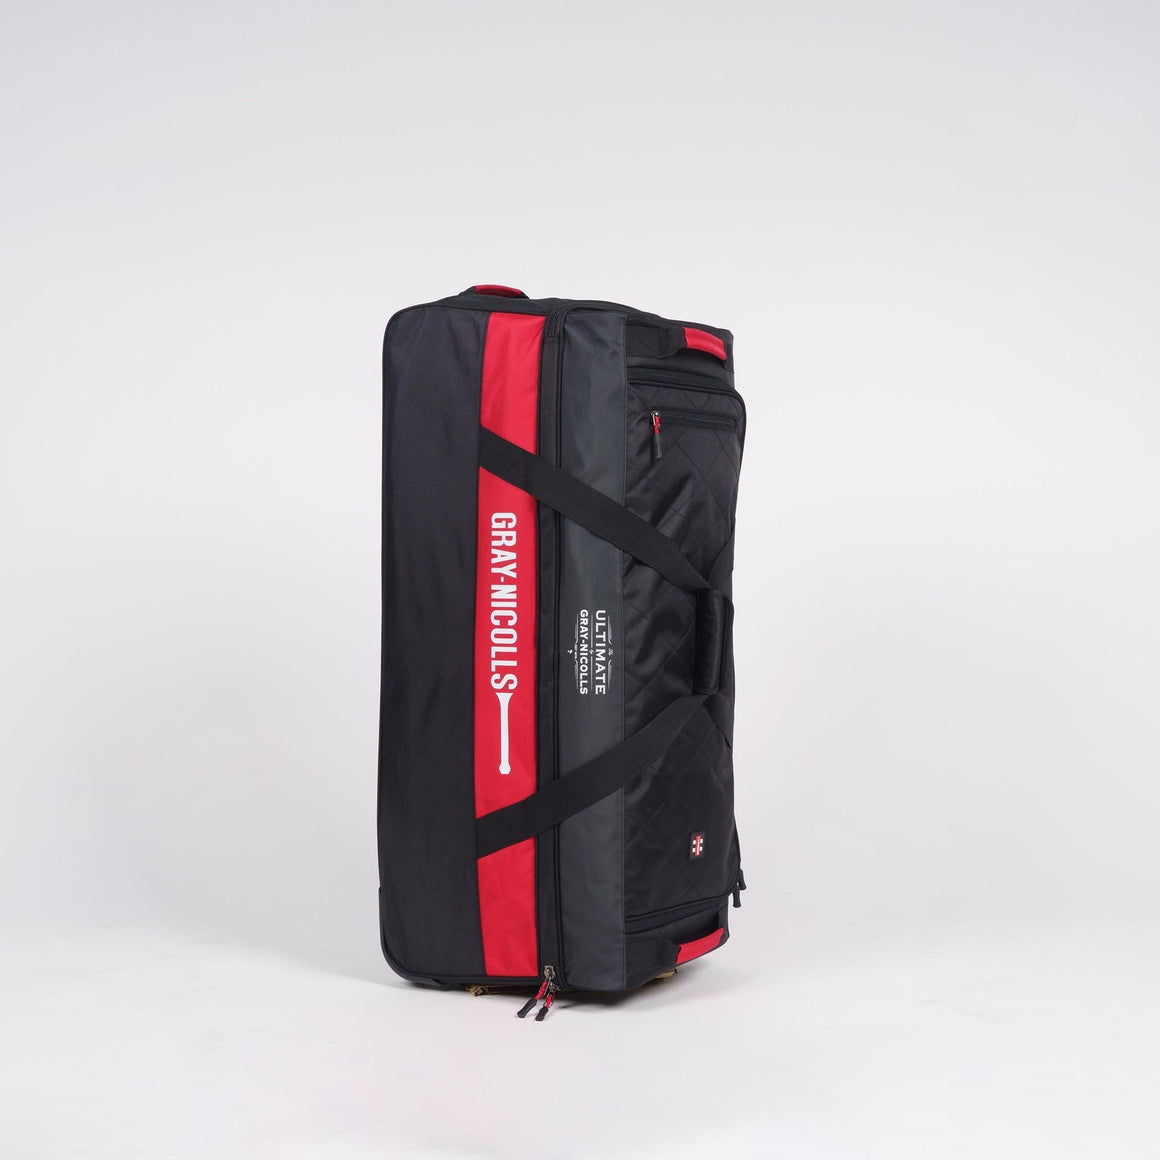 Gray Nicolls Ultimate 1.1 Wheelie Bag